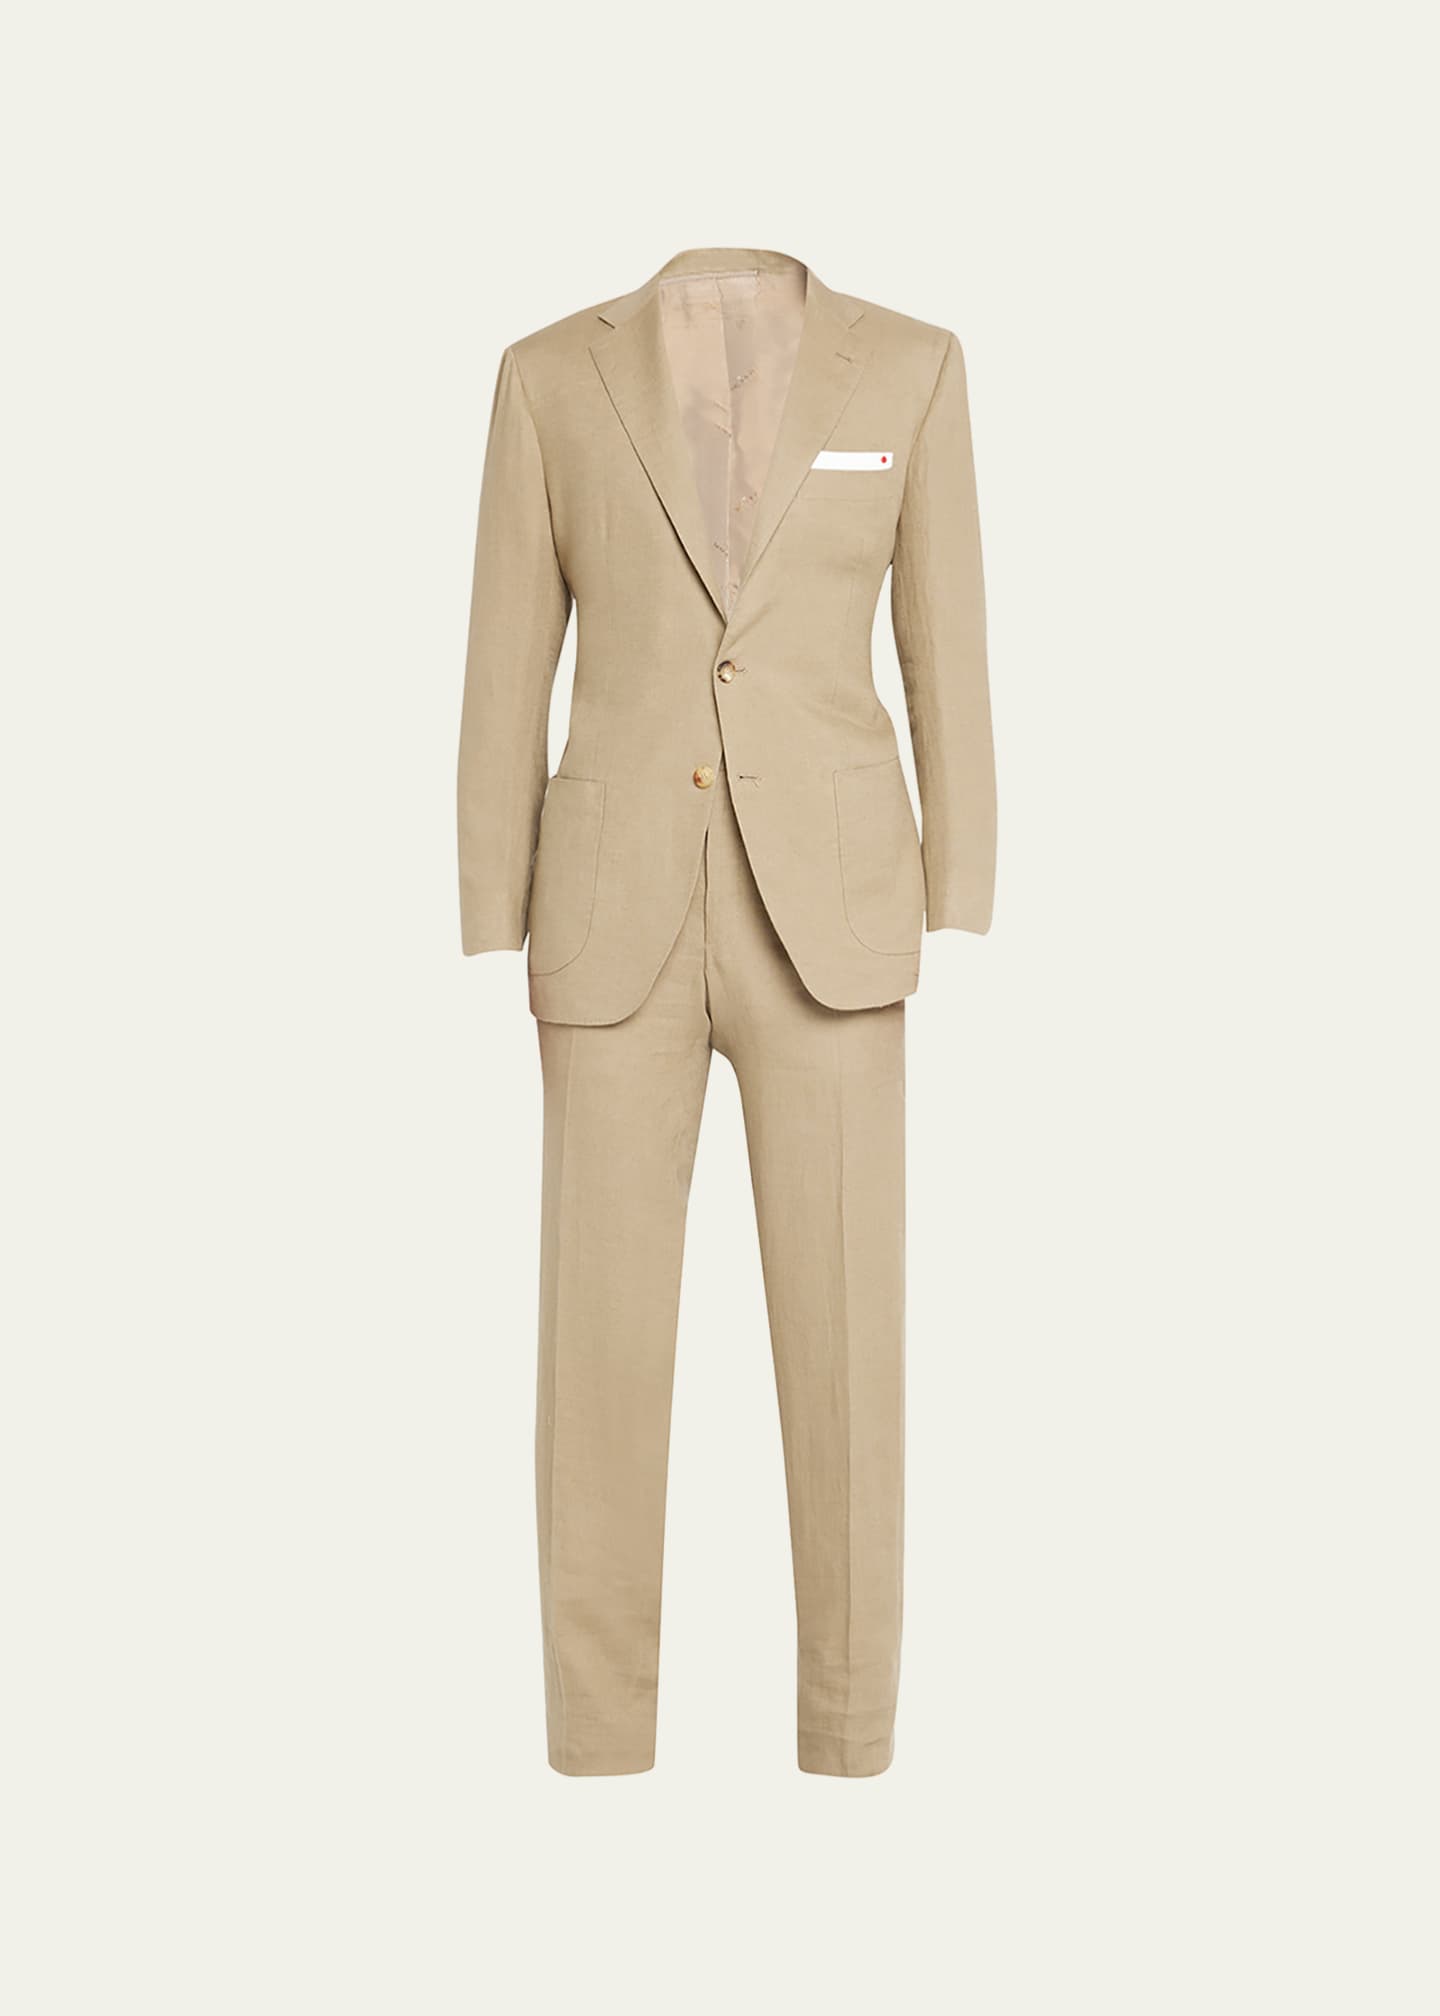 Kiton Men's Solid Linen Suit - Bergdorf Goodman